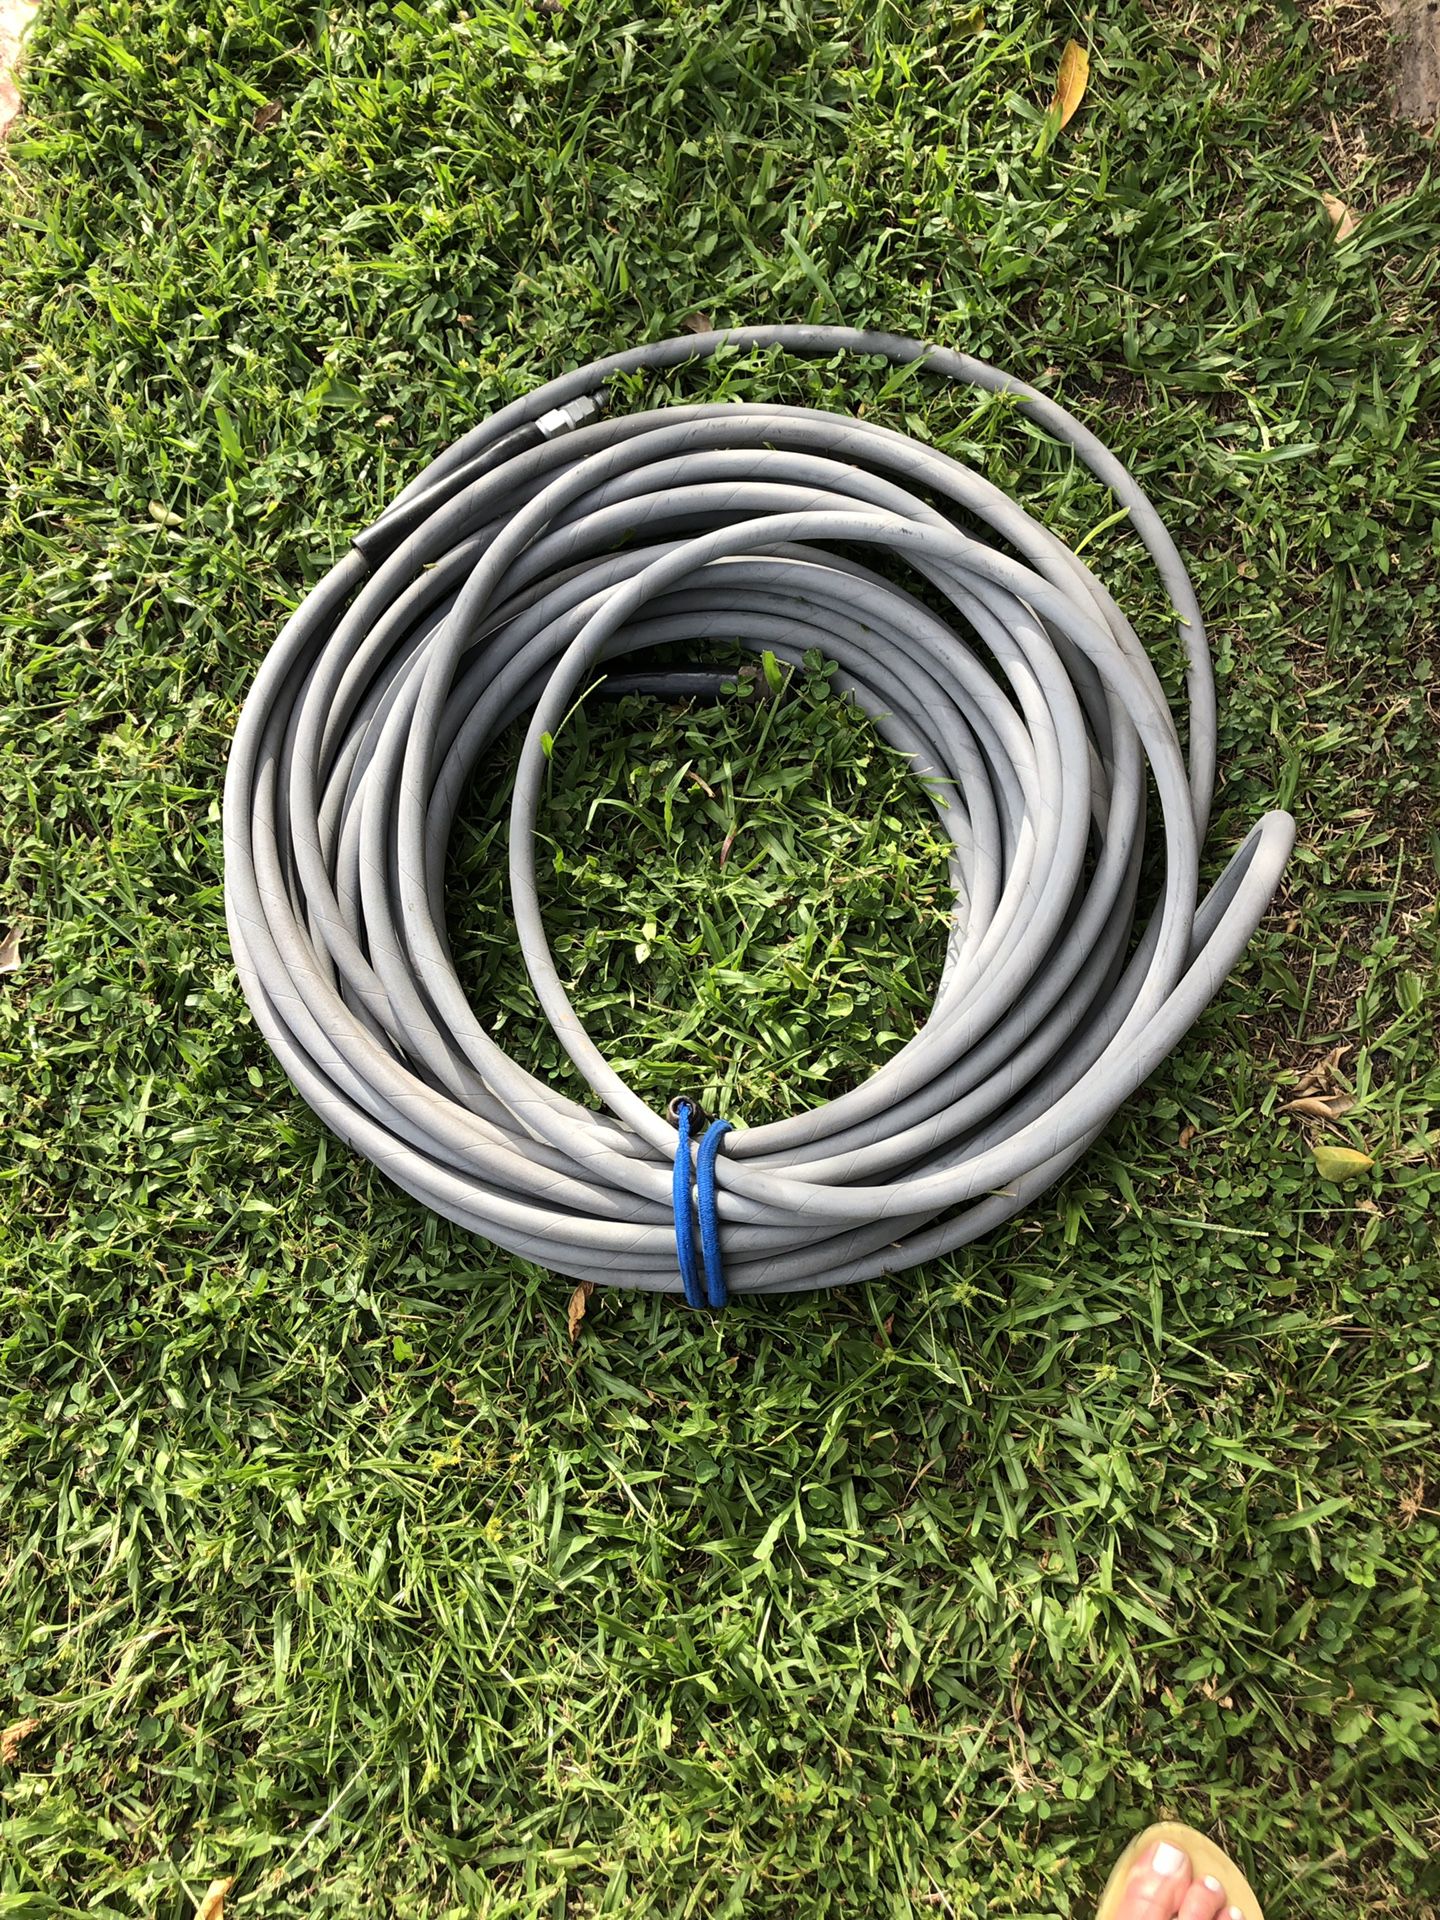 Pressure cleaner hose 100 feet